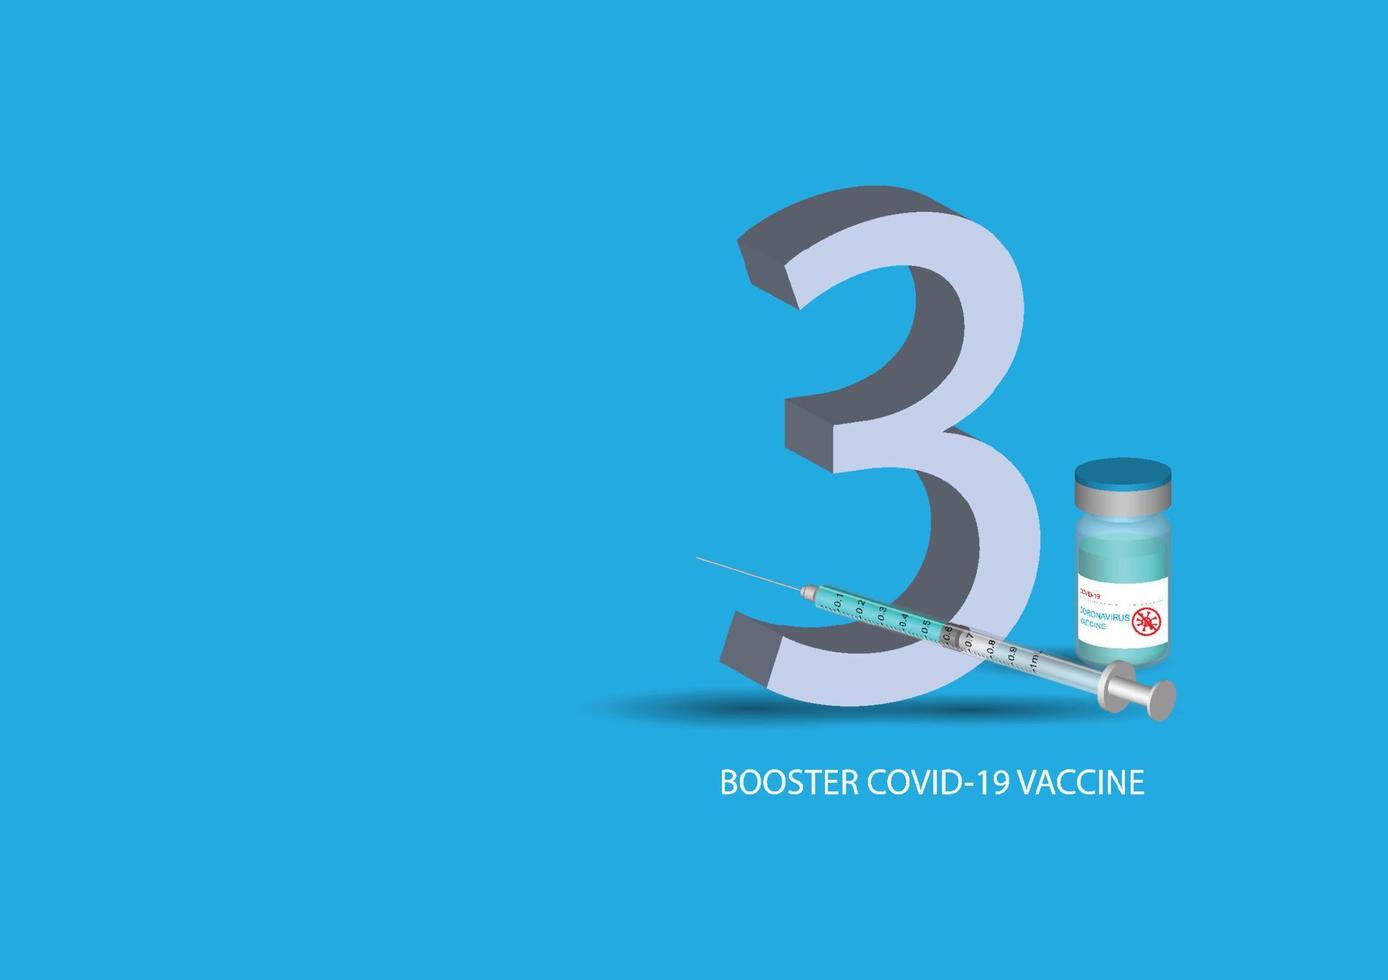 boosterdosis covid-19-vaccin vector